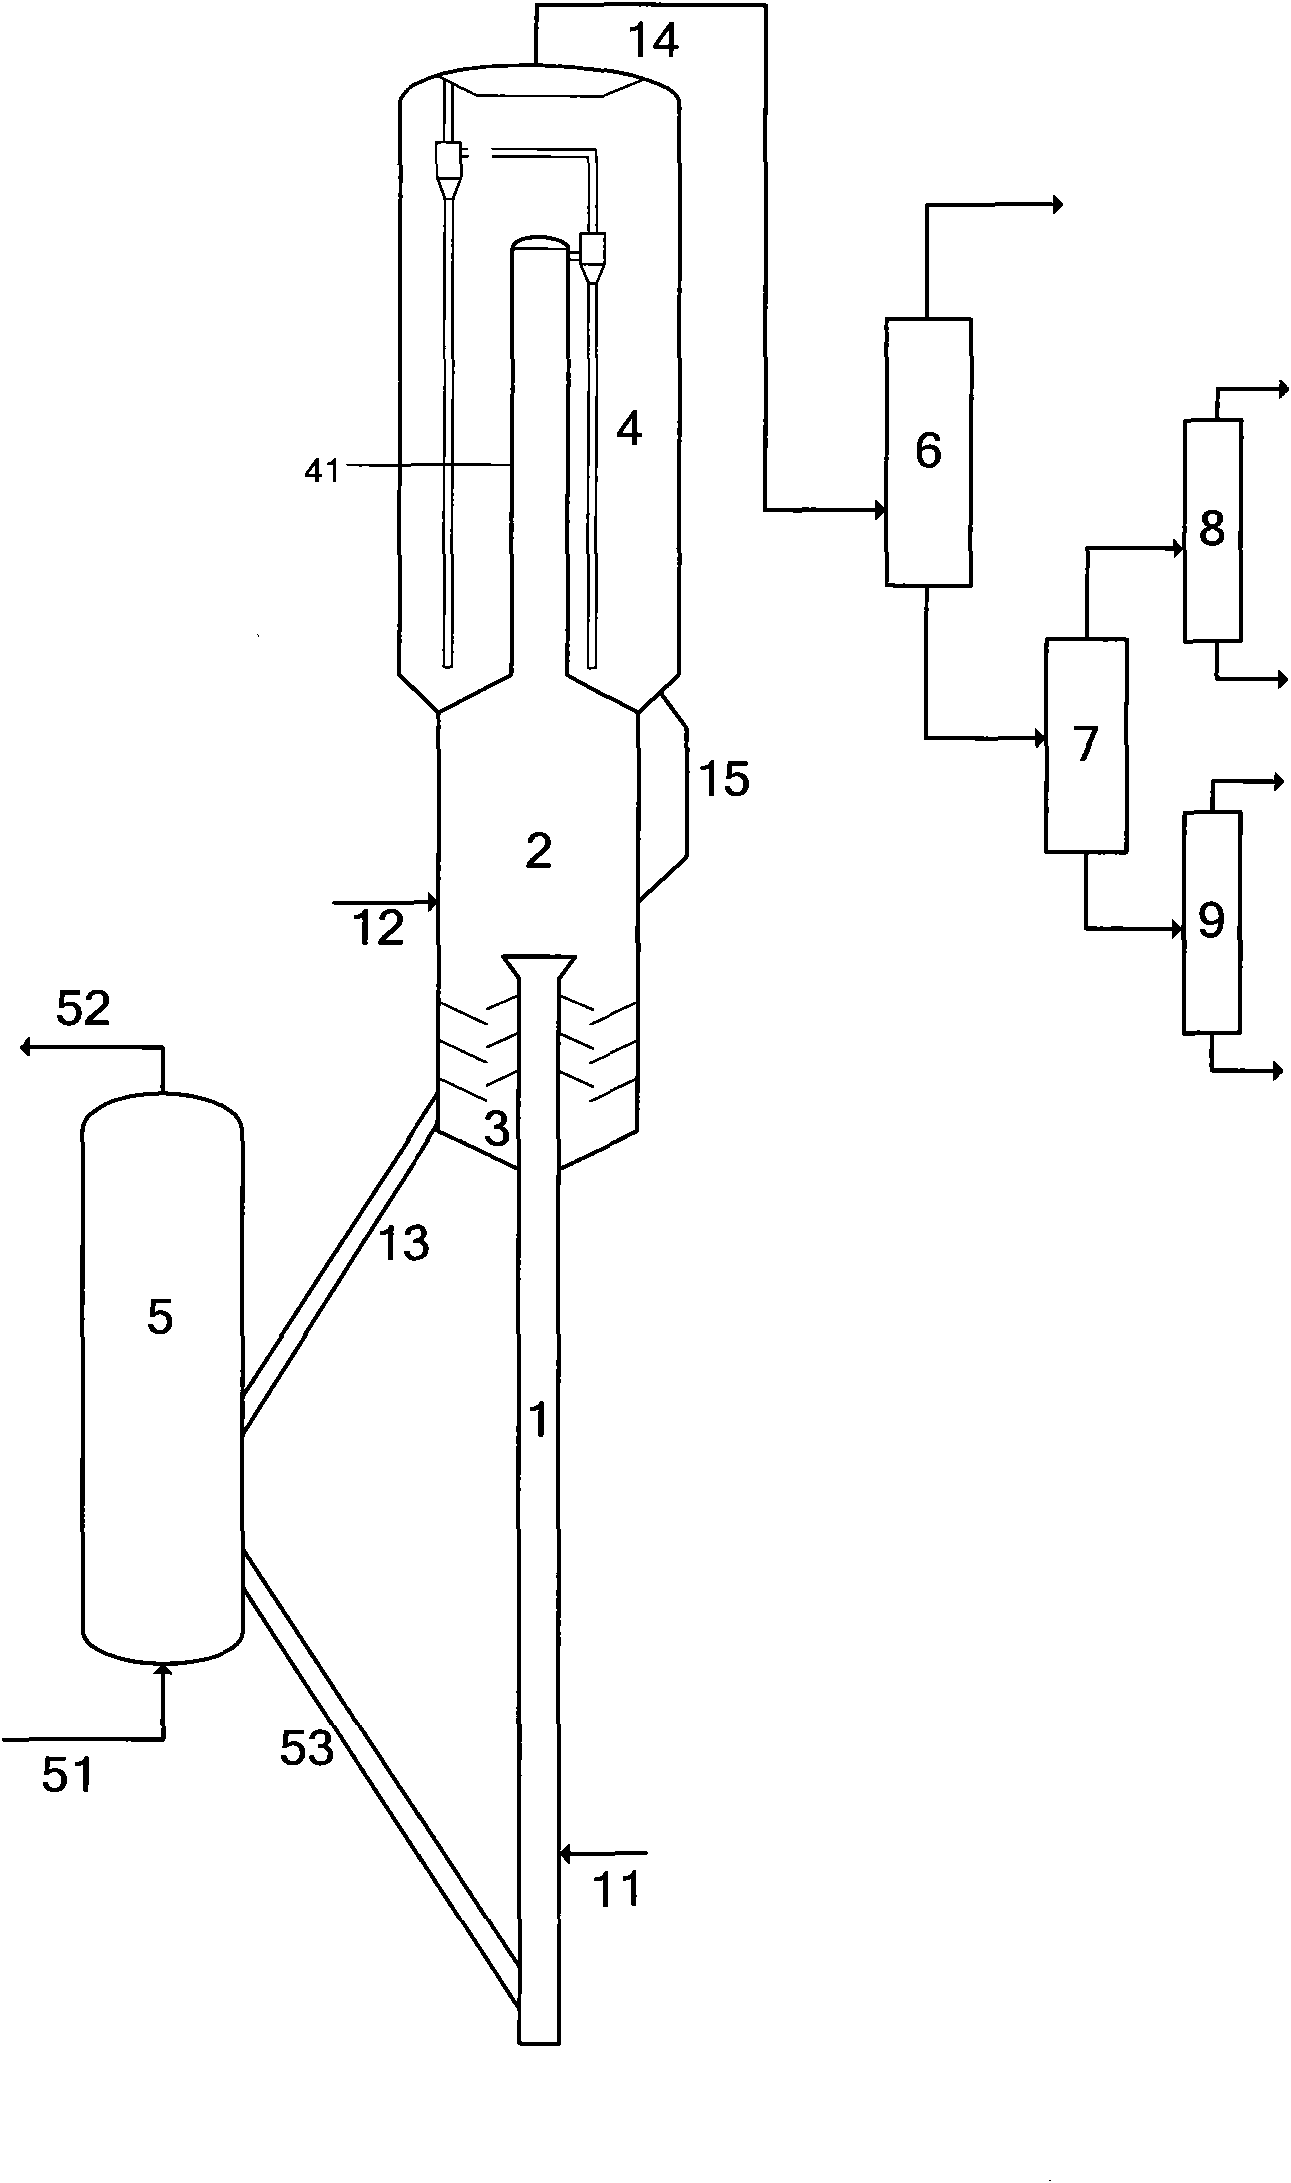 Method for preparing propylene through catalytic conversion of olefin raw material